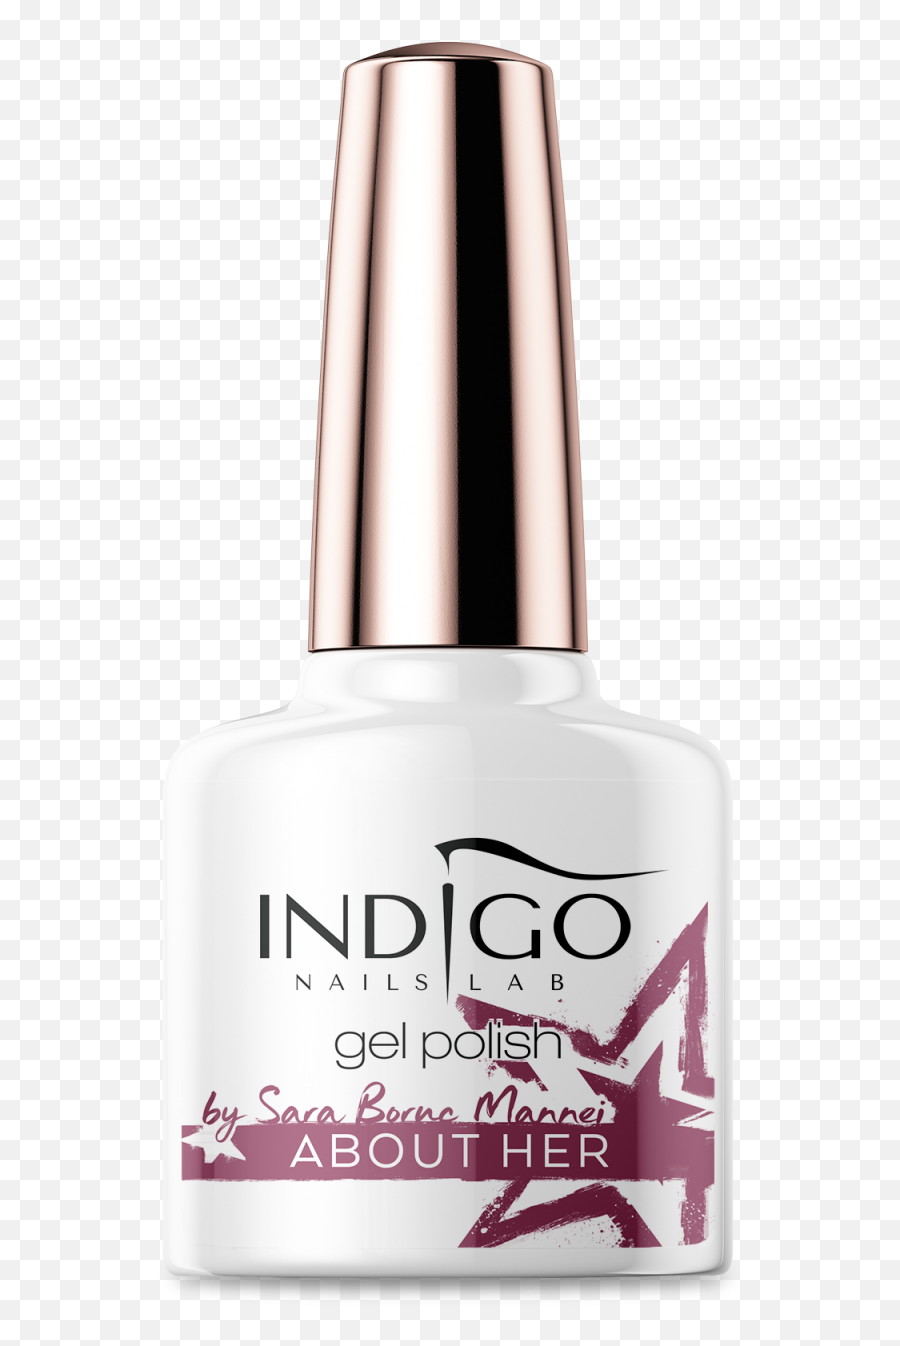 About - Hergelpolish7ml11png Indigo Nails Uk Indigo Nails,Manicure Png